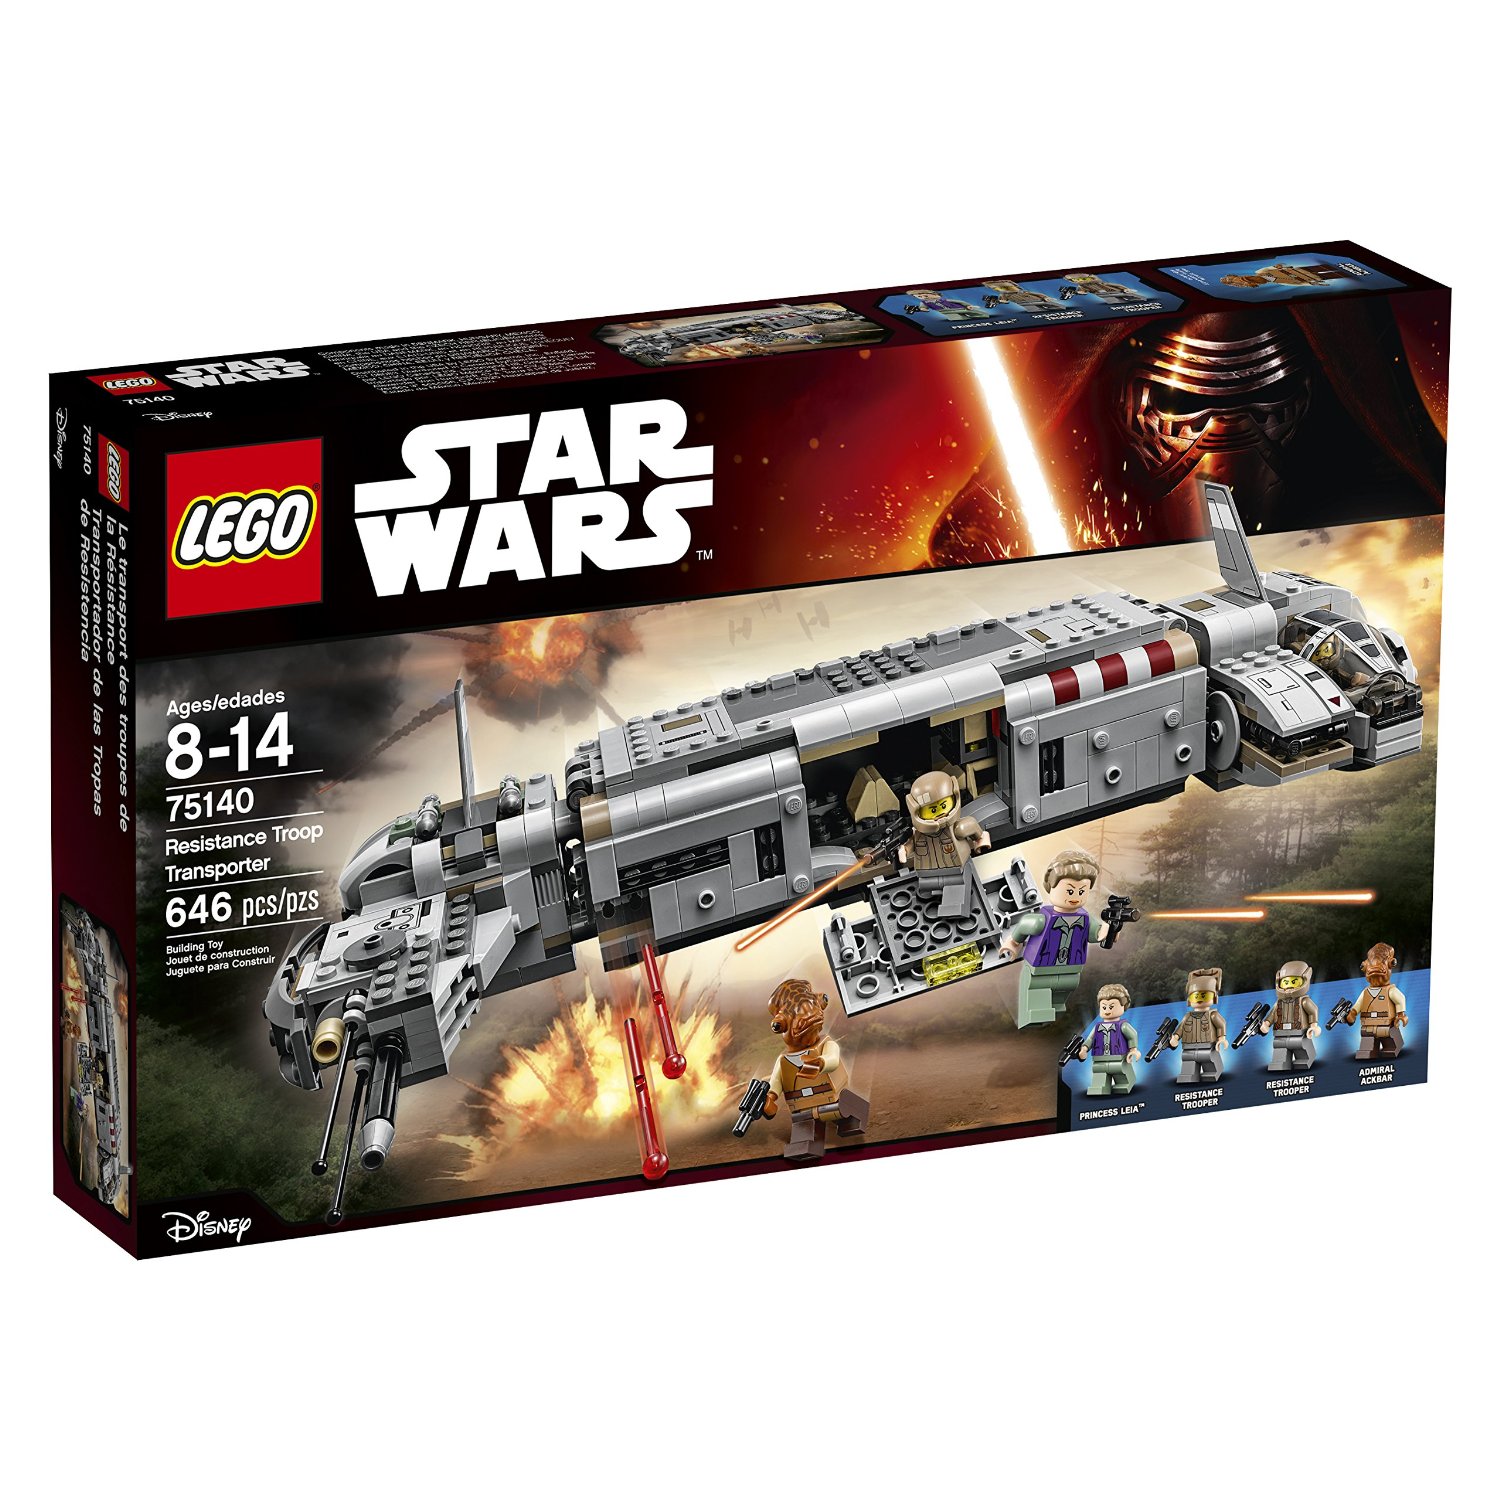 New LEGO Star Wars sets